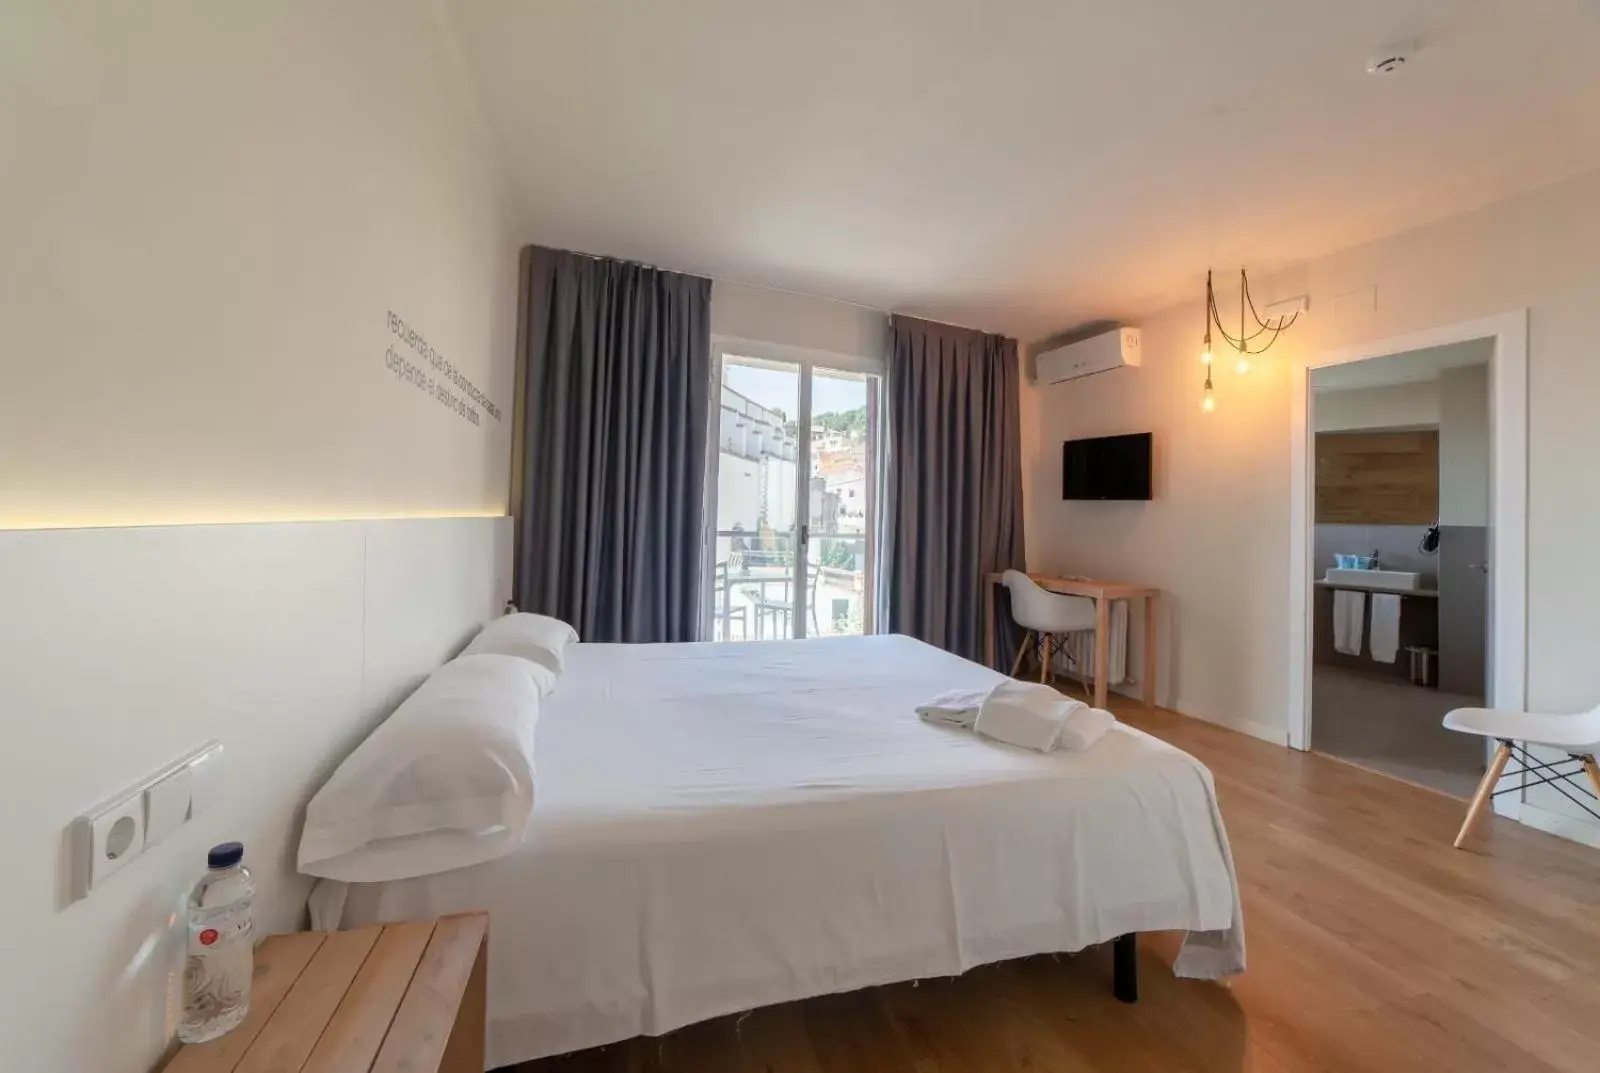 Bed, Room Photo in Dynamic Hotels Caldetes Barcelona